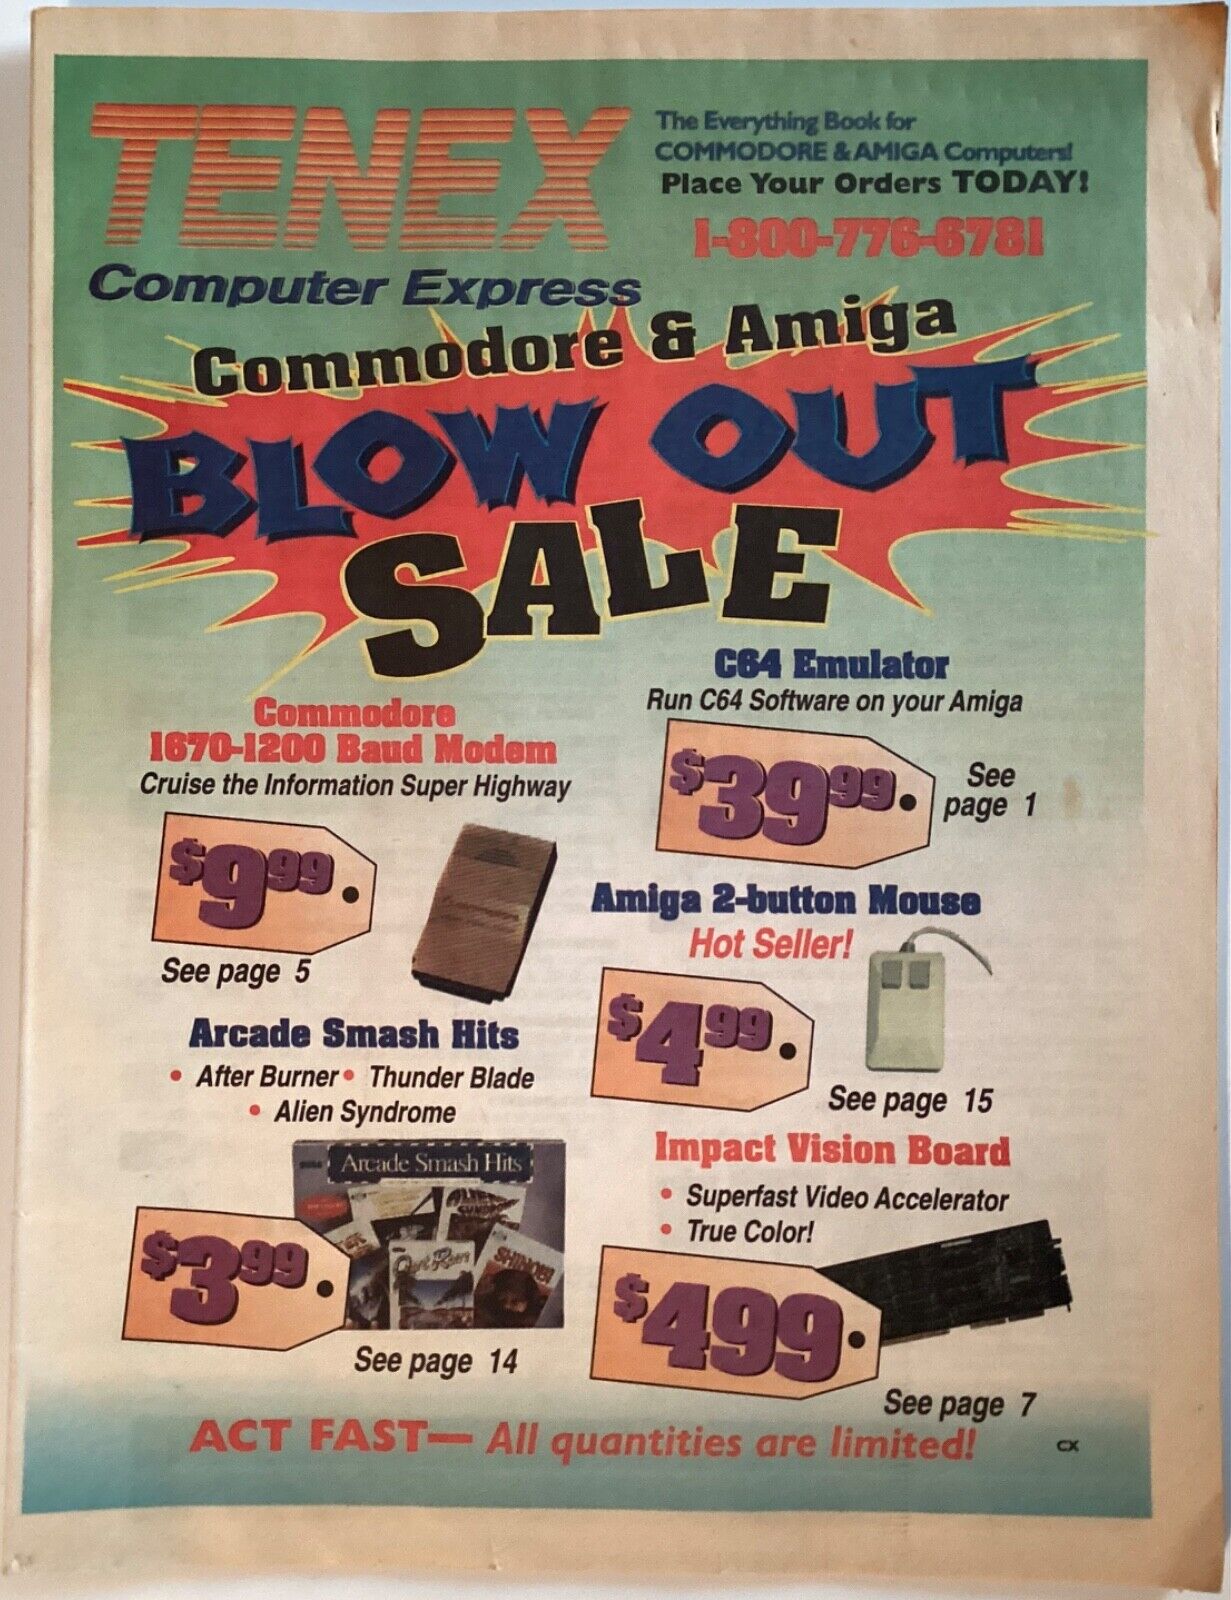 Tenex Computer Express Commodore & Amiga Hardware Catalog 1990’s Vintage Retro